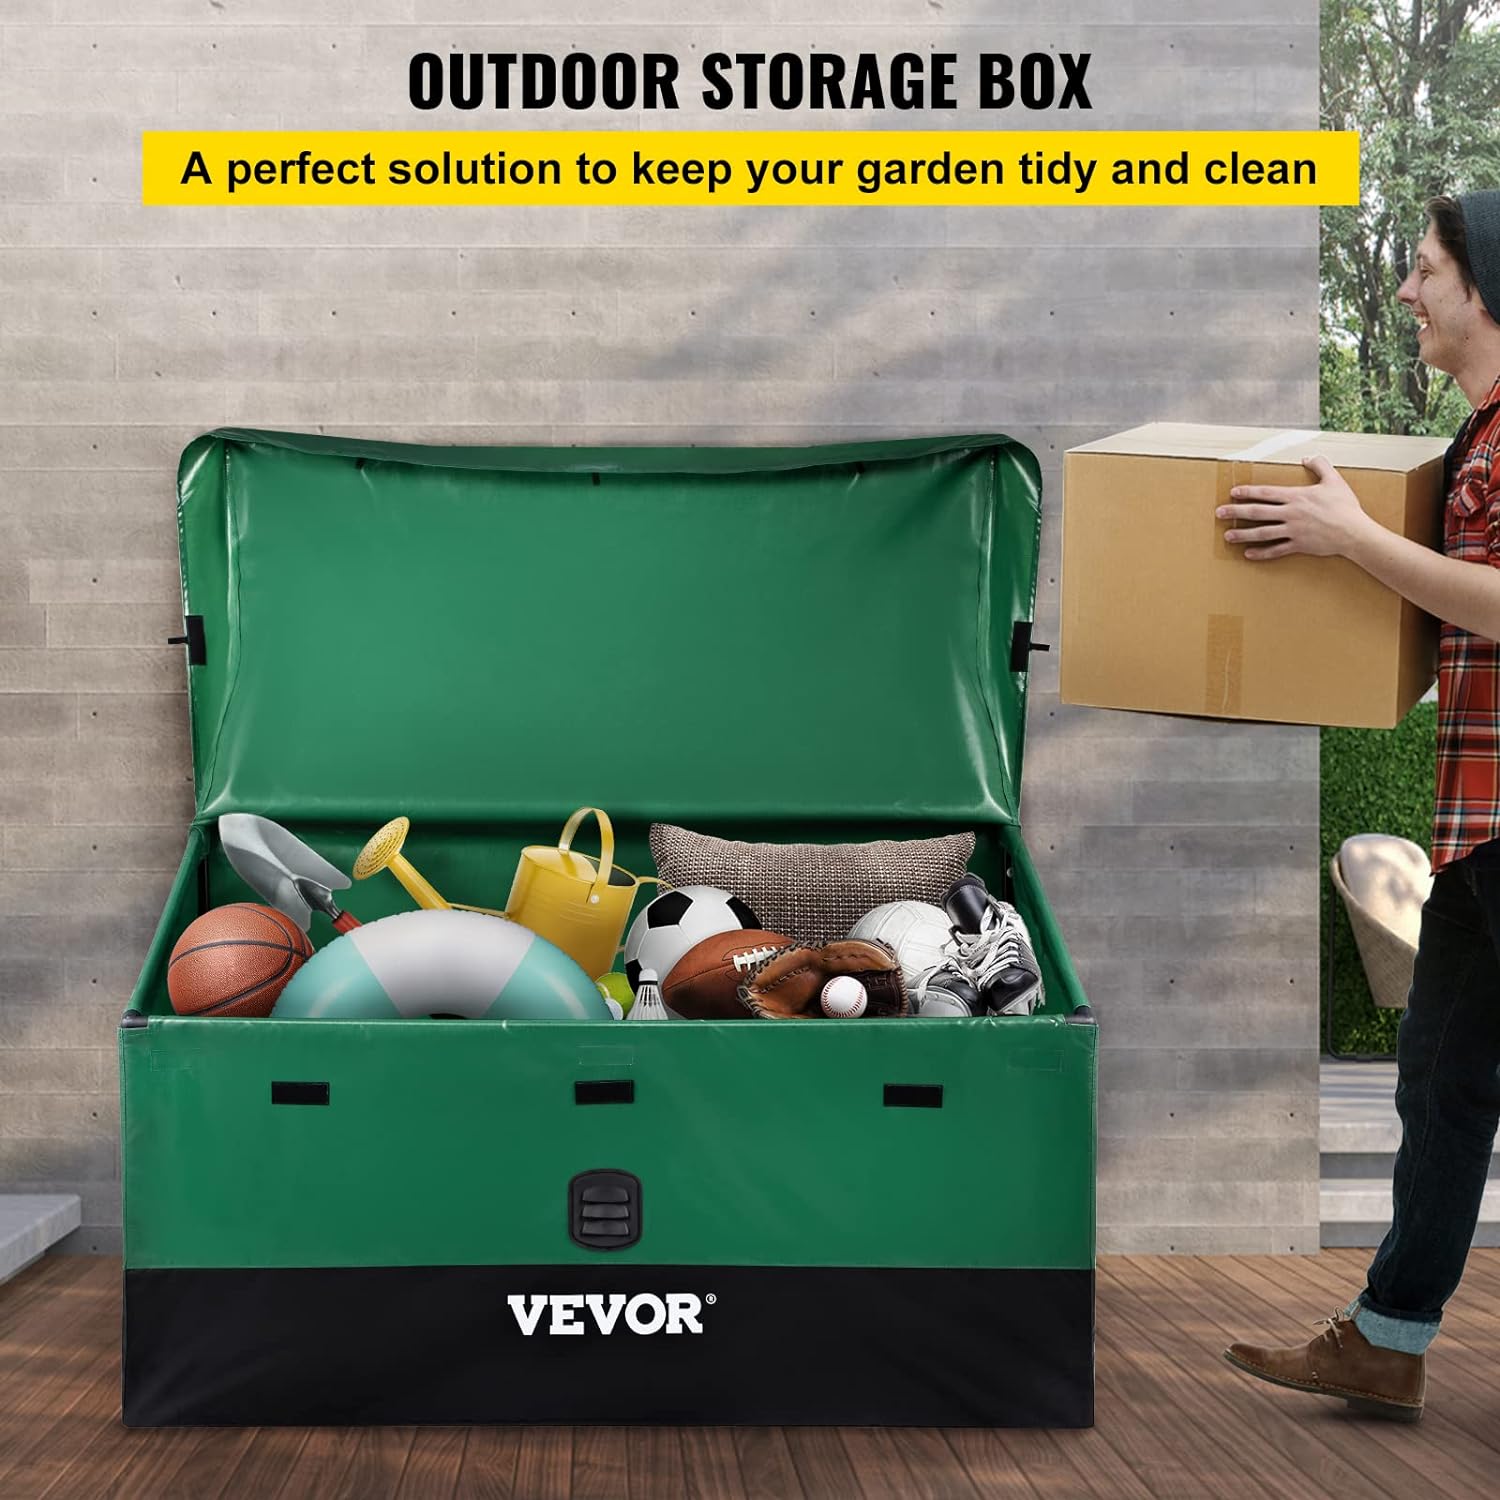 VEVOR Outdoor Storage Box, 100Gal Waterproof PE Tarpaulin Deck Box w/ Galvanized Frame, All-Weather Protection